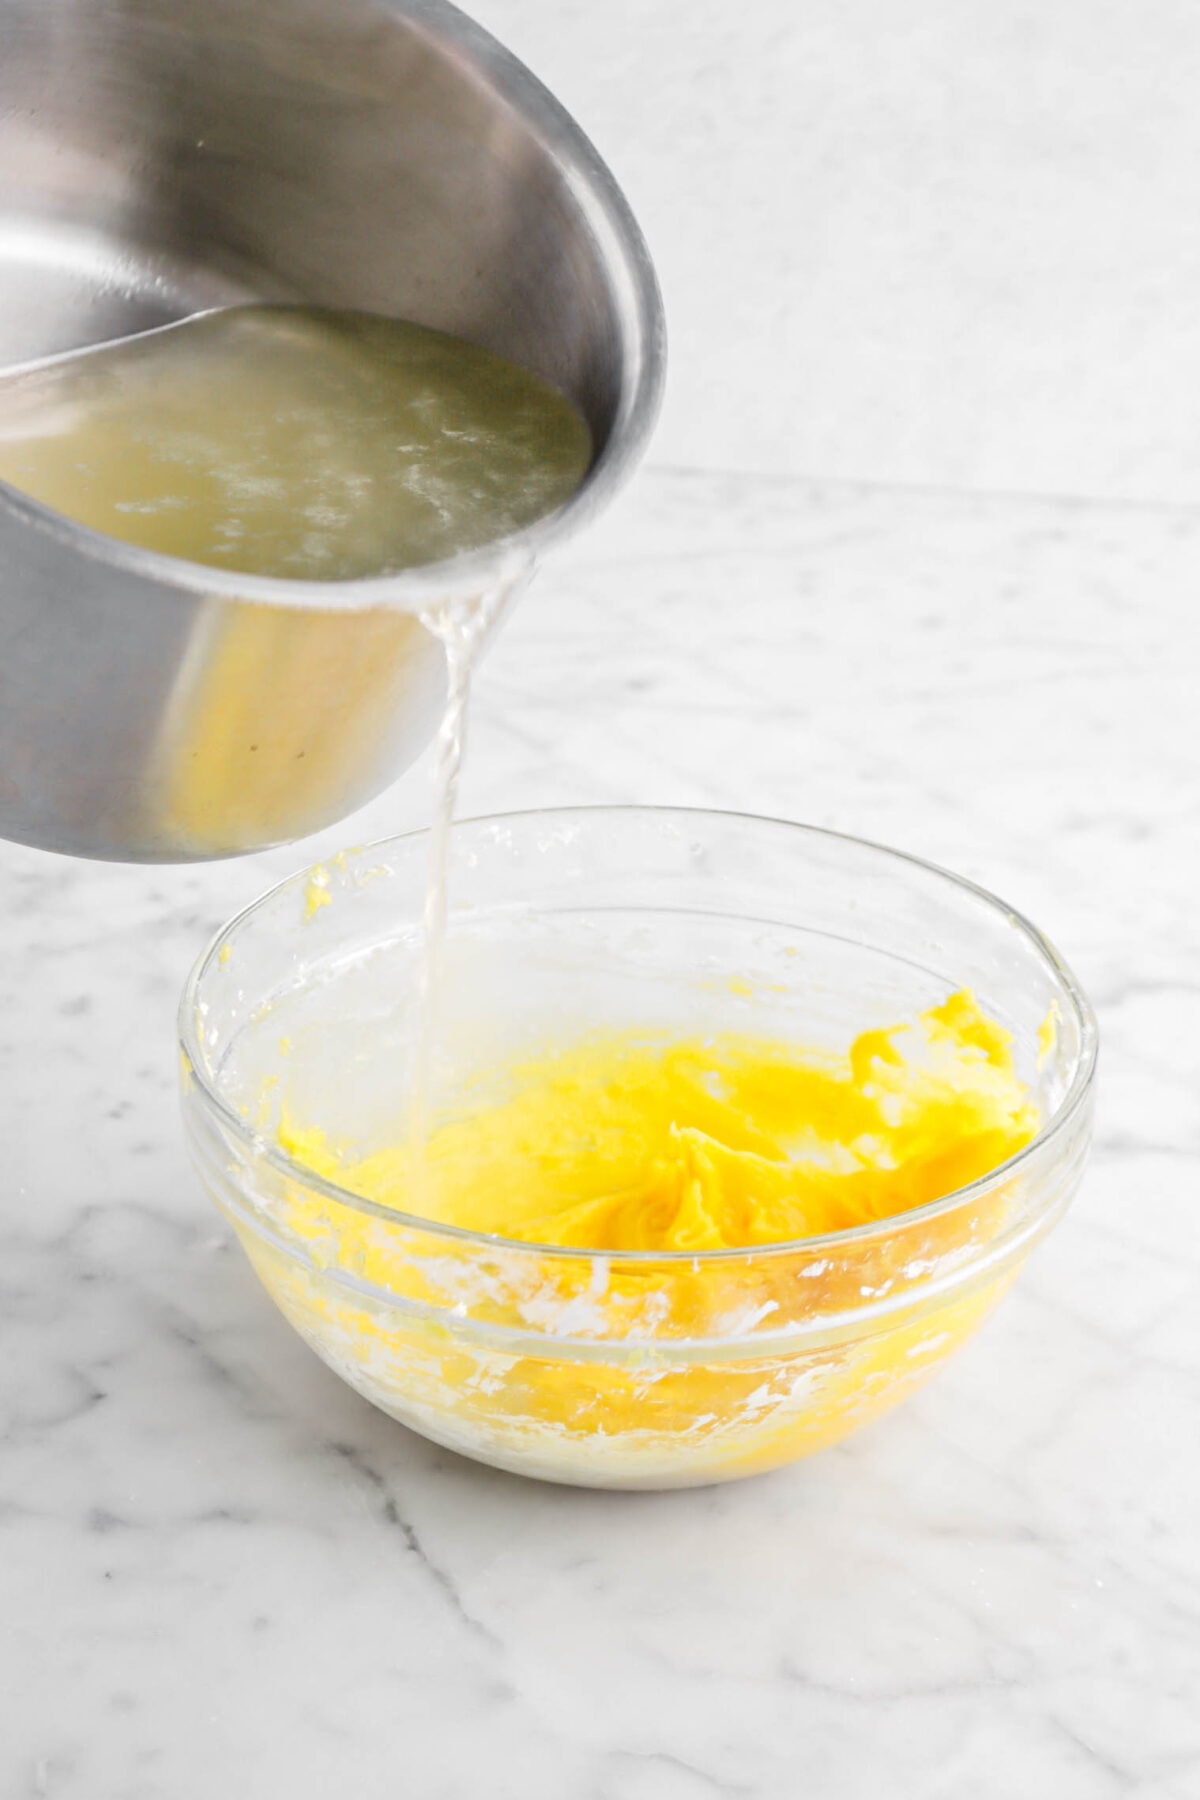 lemon mixture being poured into egg yolk mixture